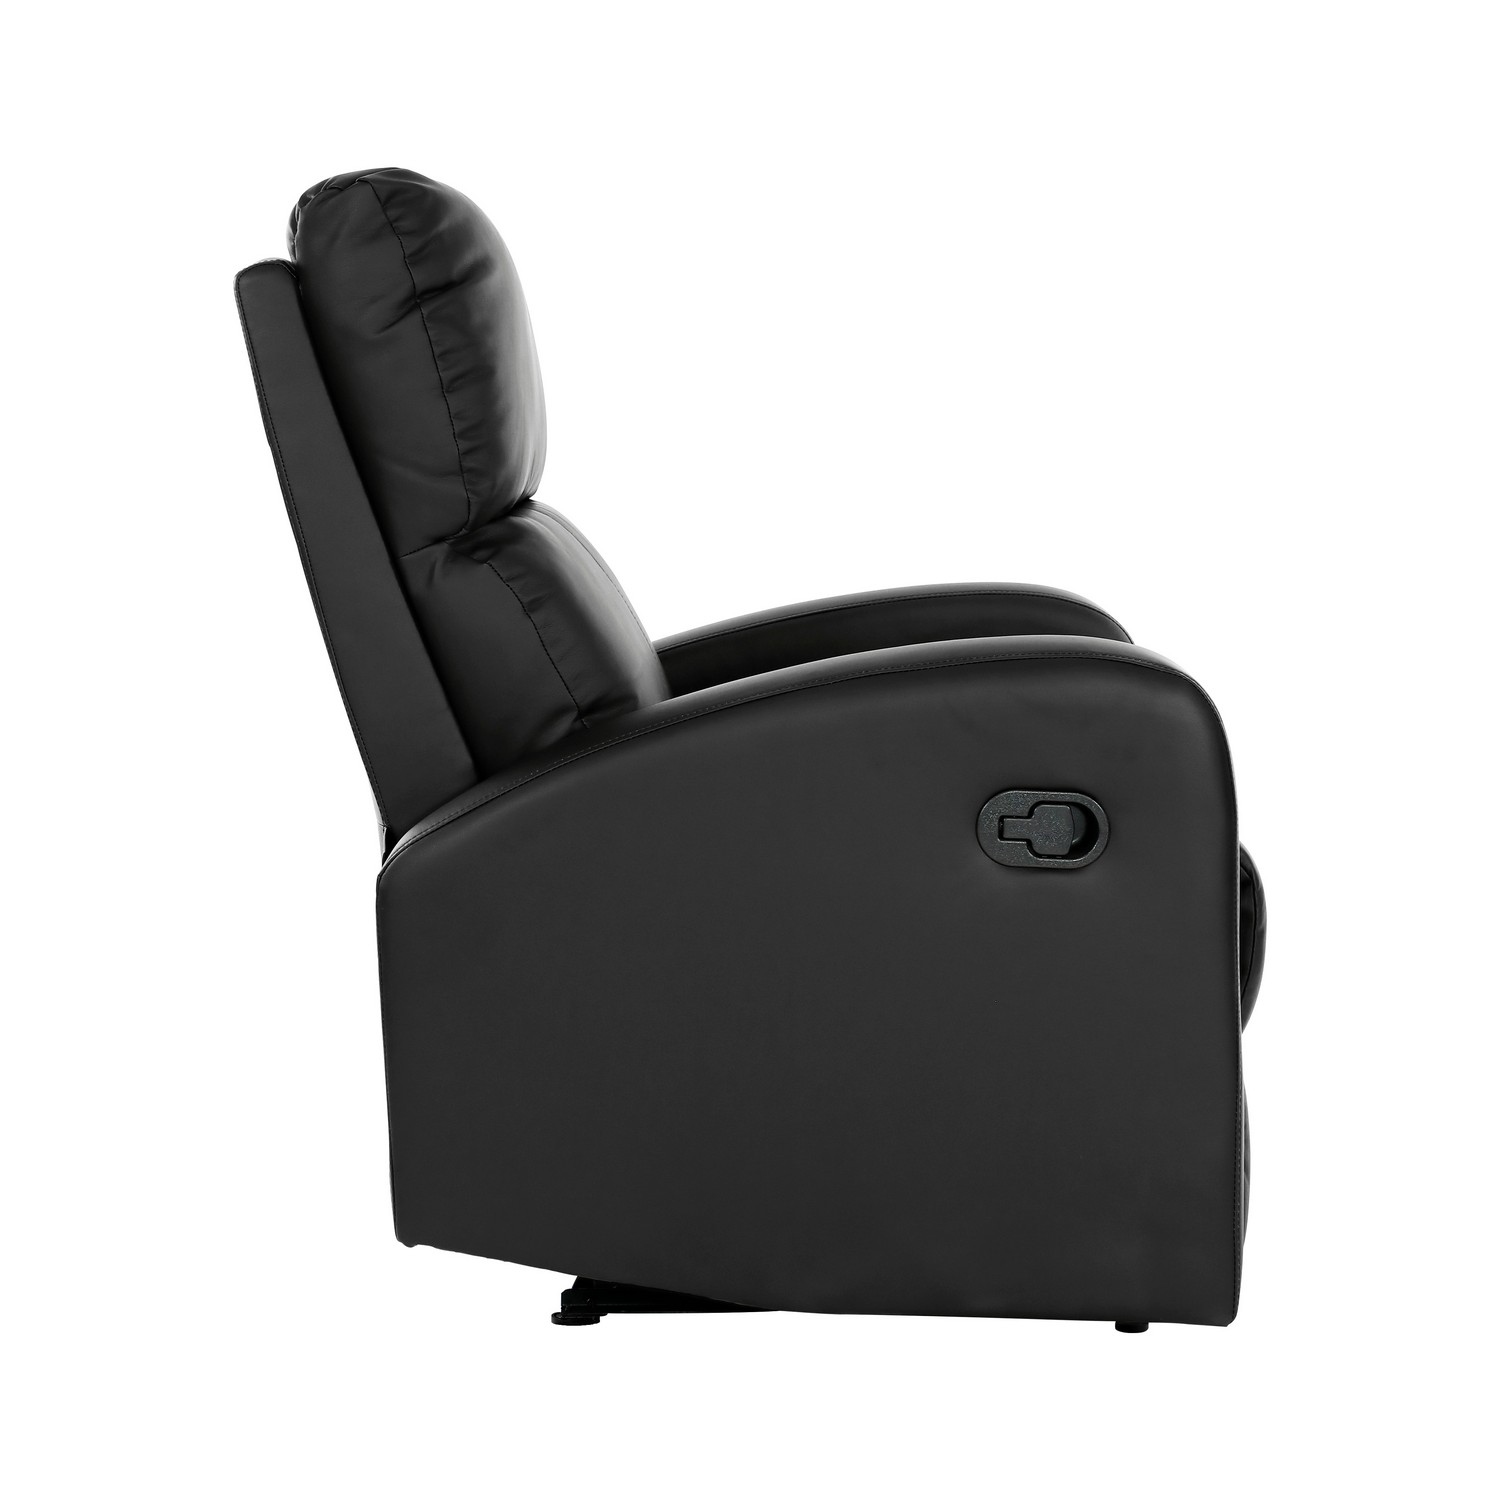 Homelegance Mendon Reclining Chair - Black